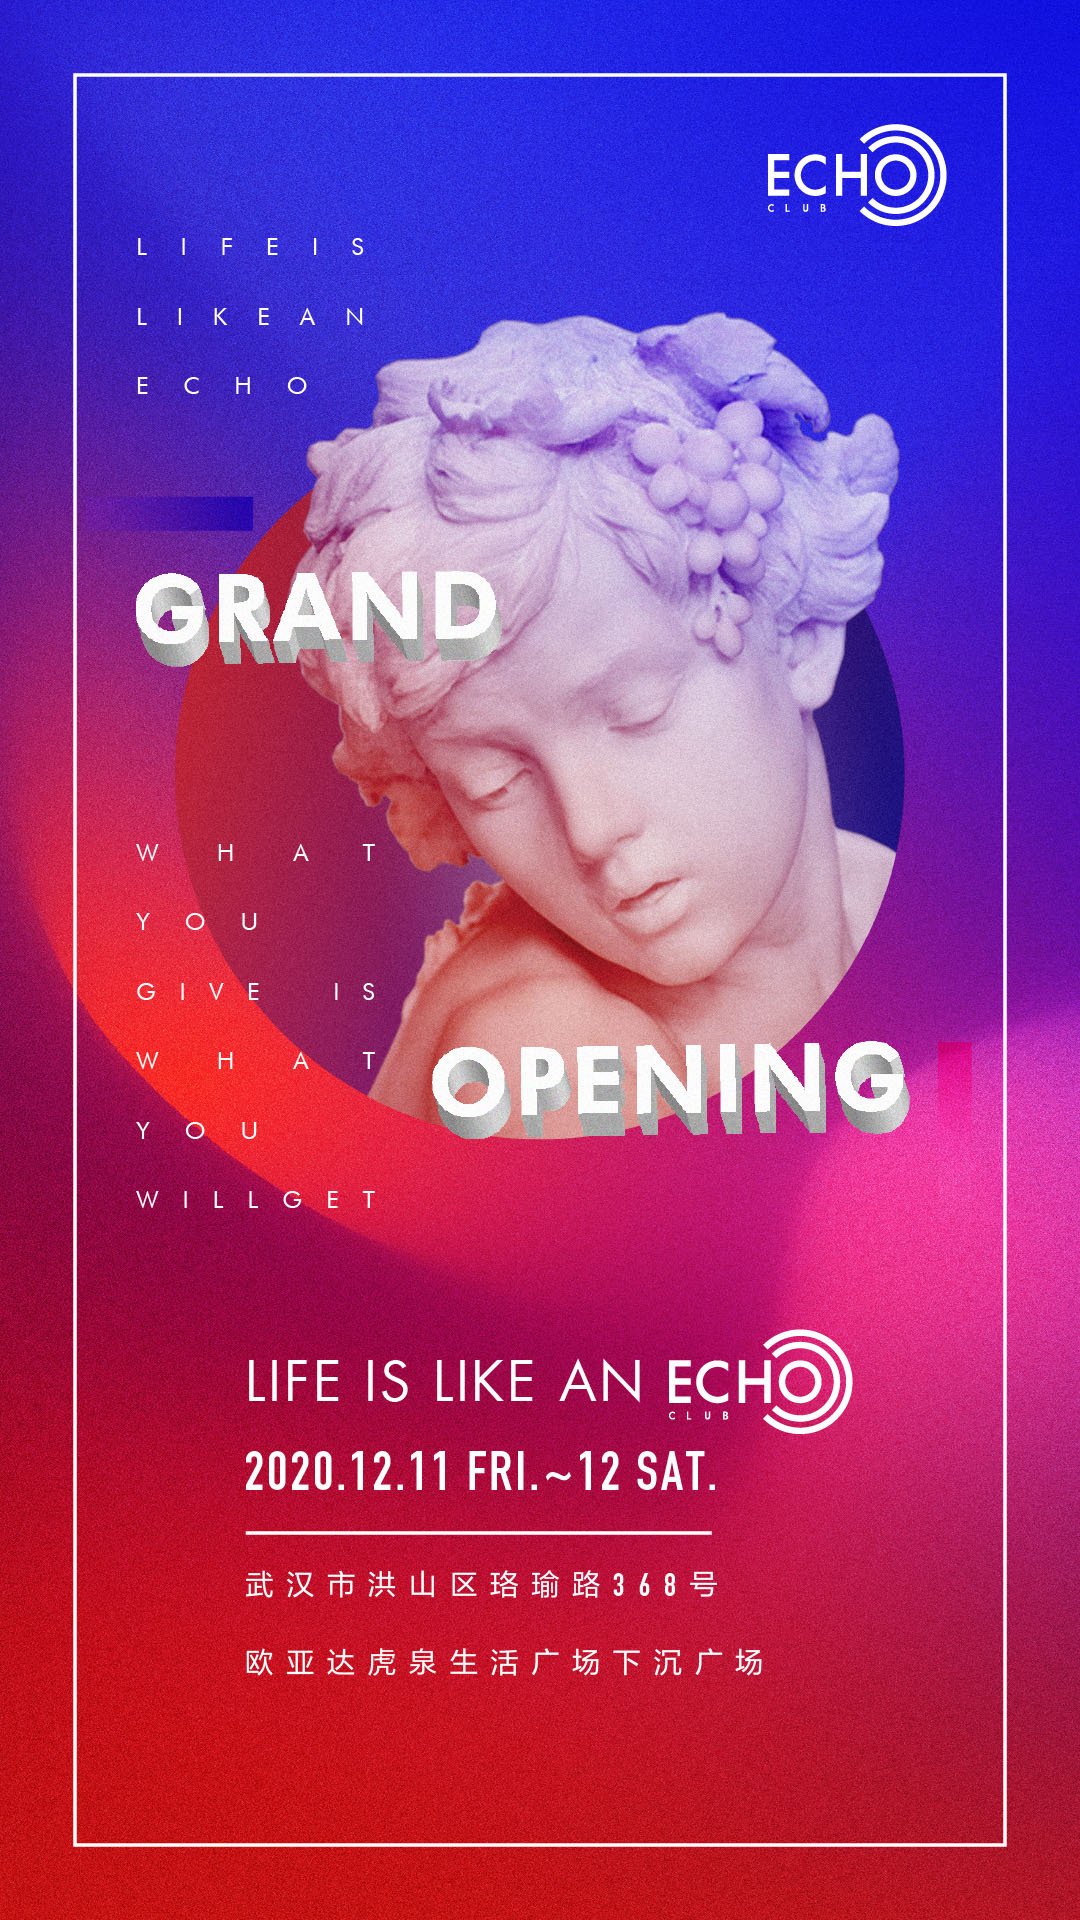 Echo Club logo and grand opening图1